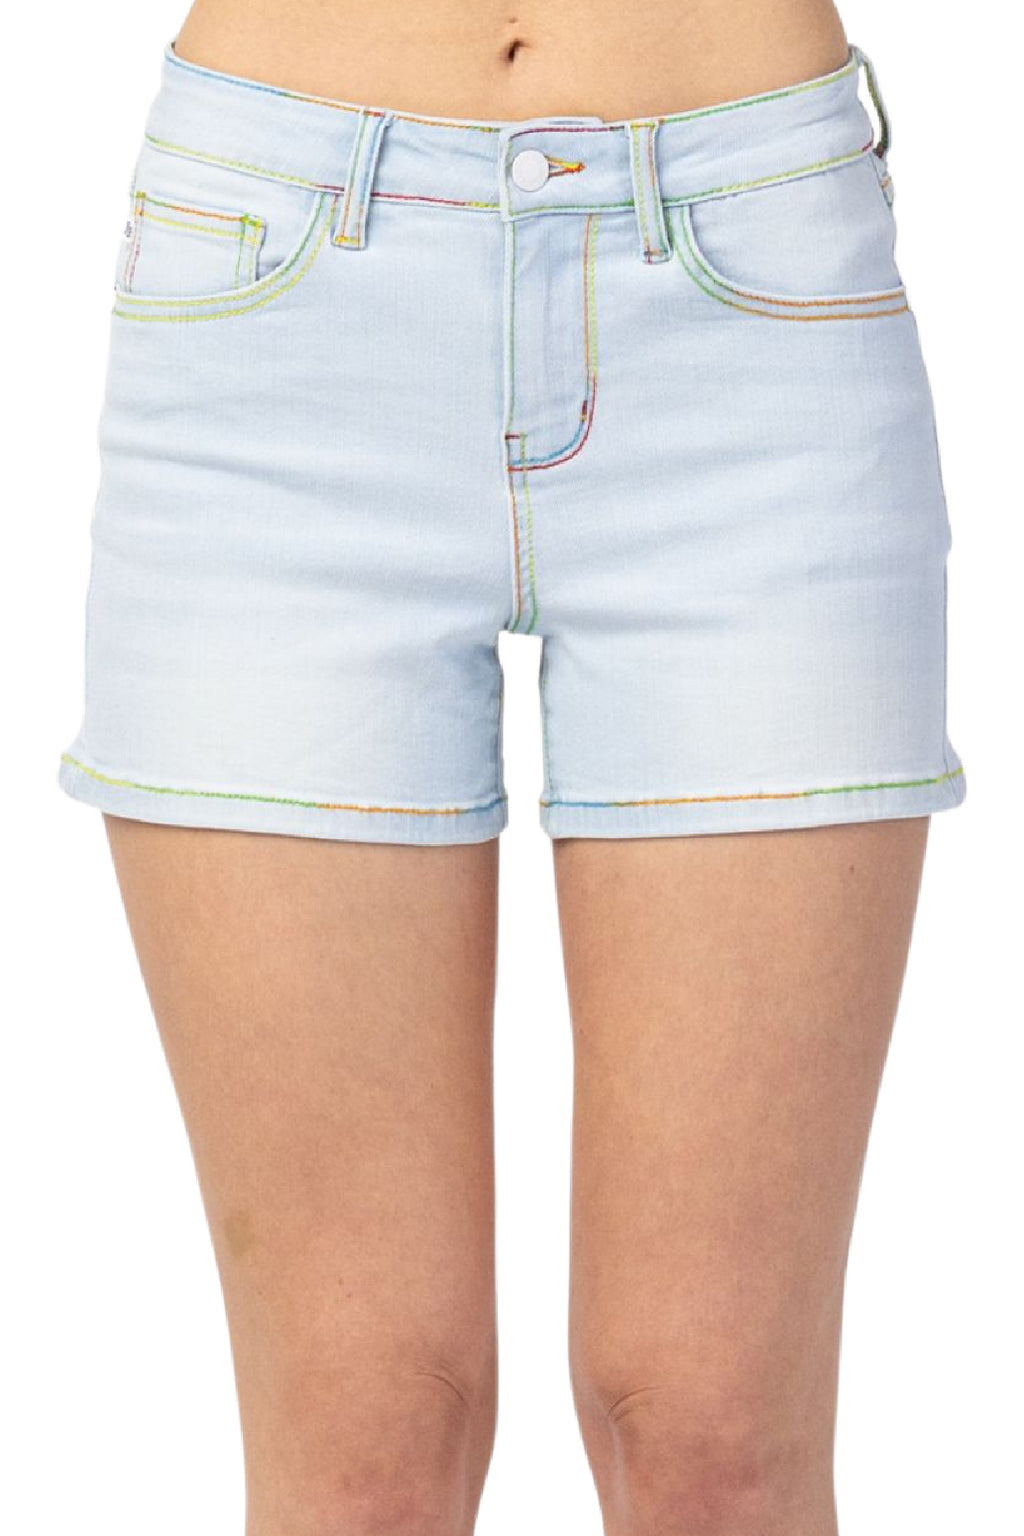 Judy Blue Rainbow Thread Mid Rise Shorts Style 150103